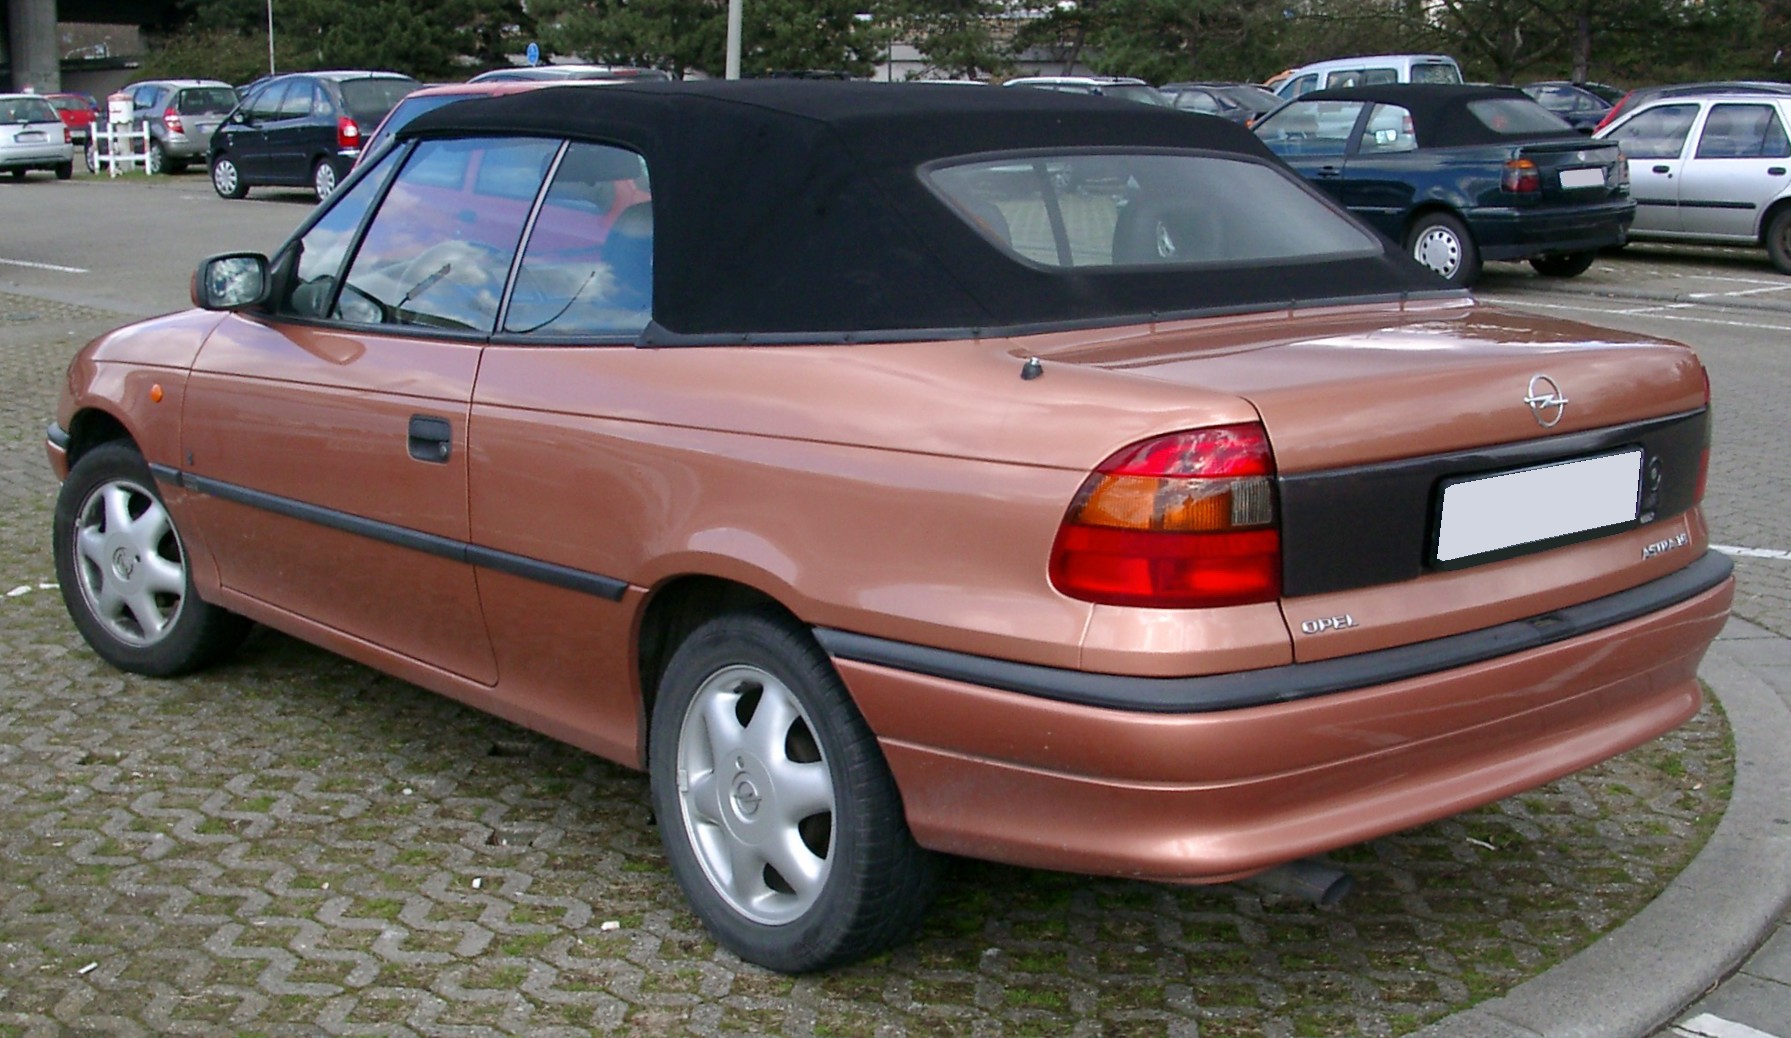 Opel_Astra_Cabrio_rear_20080326.jpg